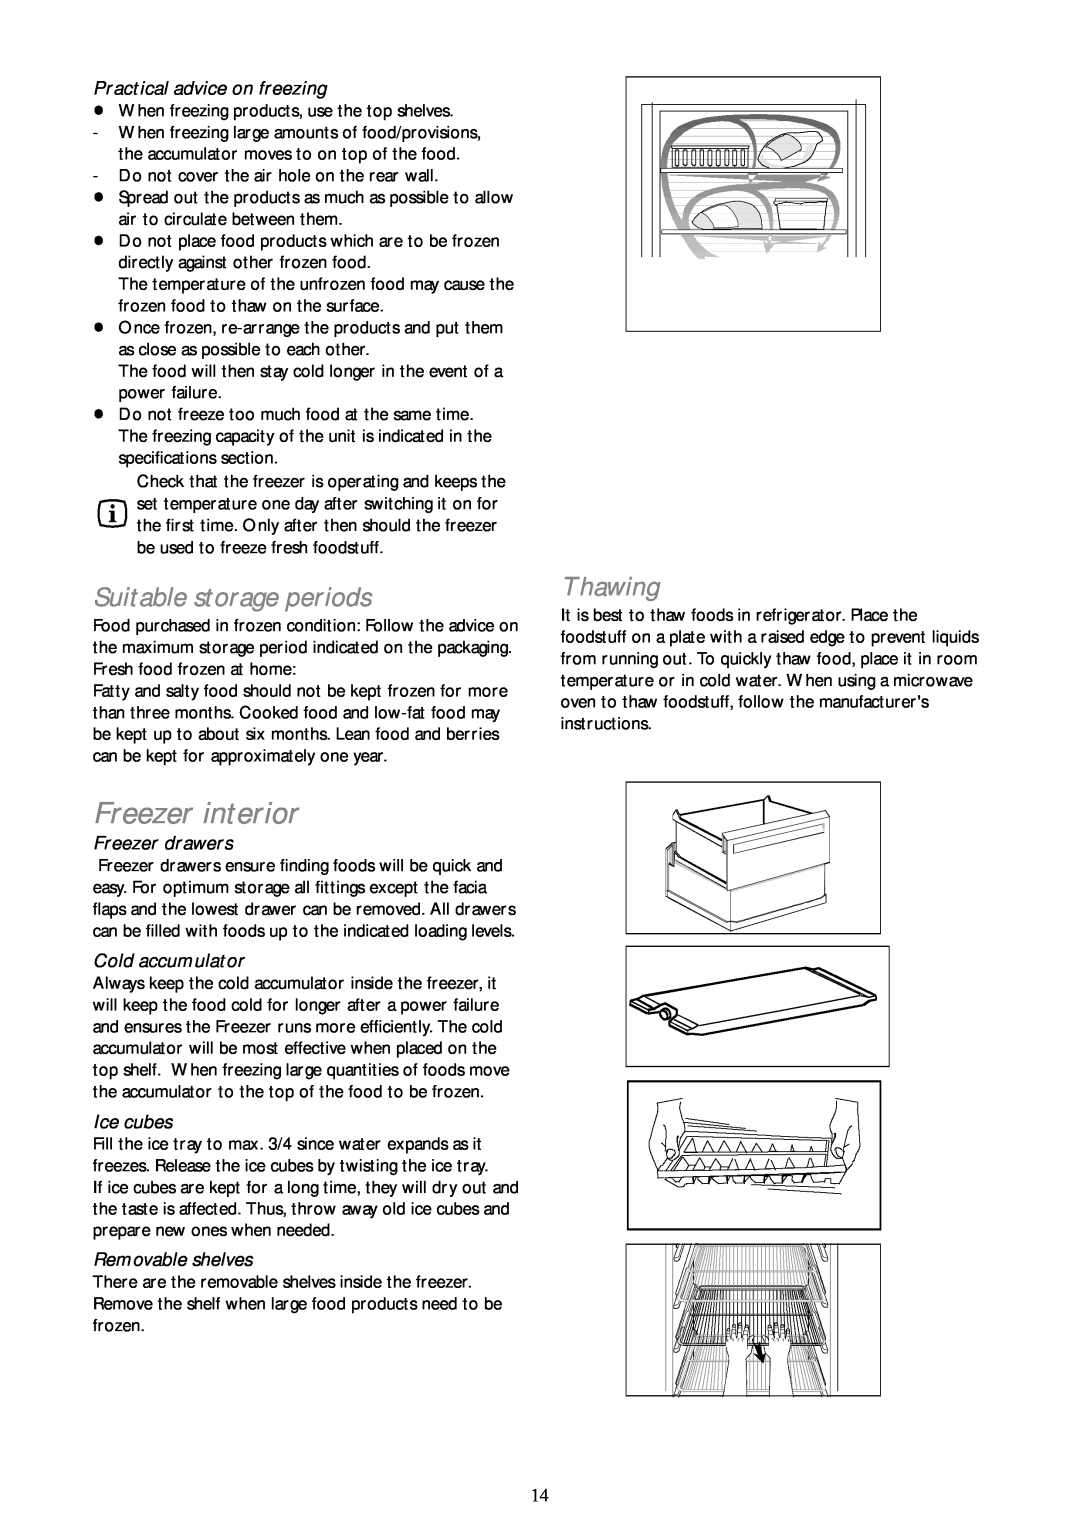 John Lewis JLFZW 1806 instruction manual Freezer interior, Suitable storage periods, Thawing 